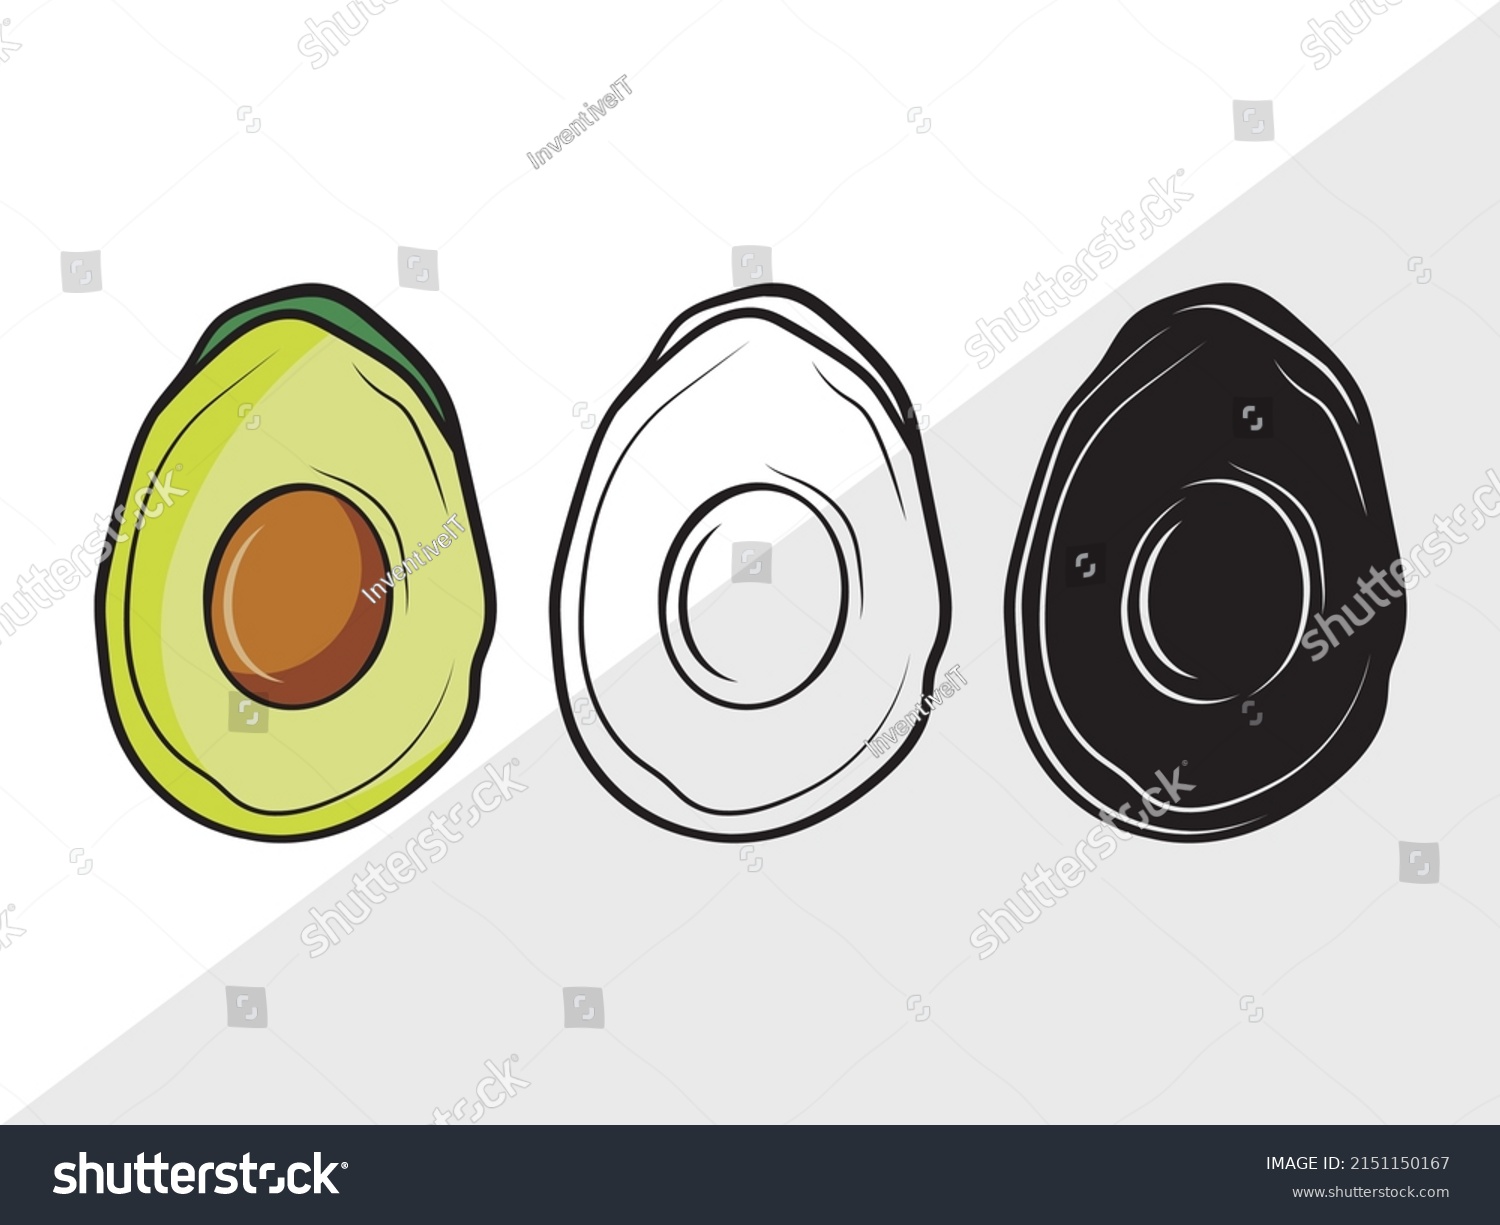 SVG of Avocado Clipart Printable Vector Illustration svg